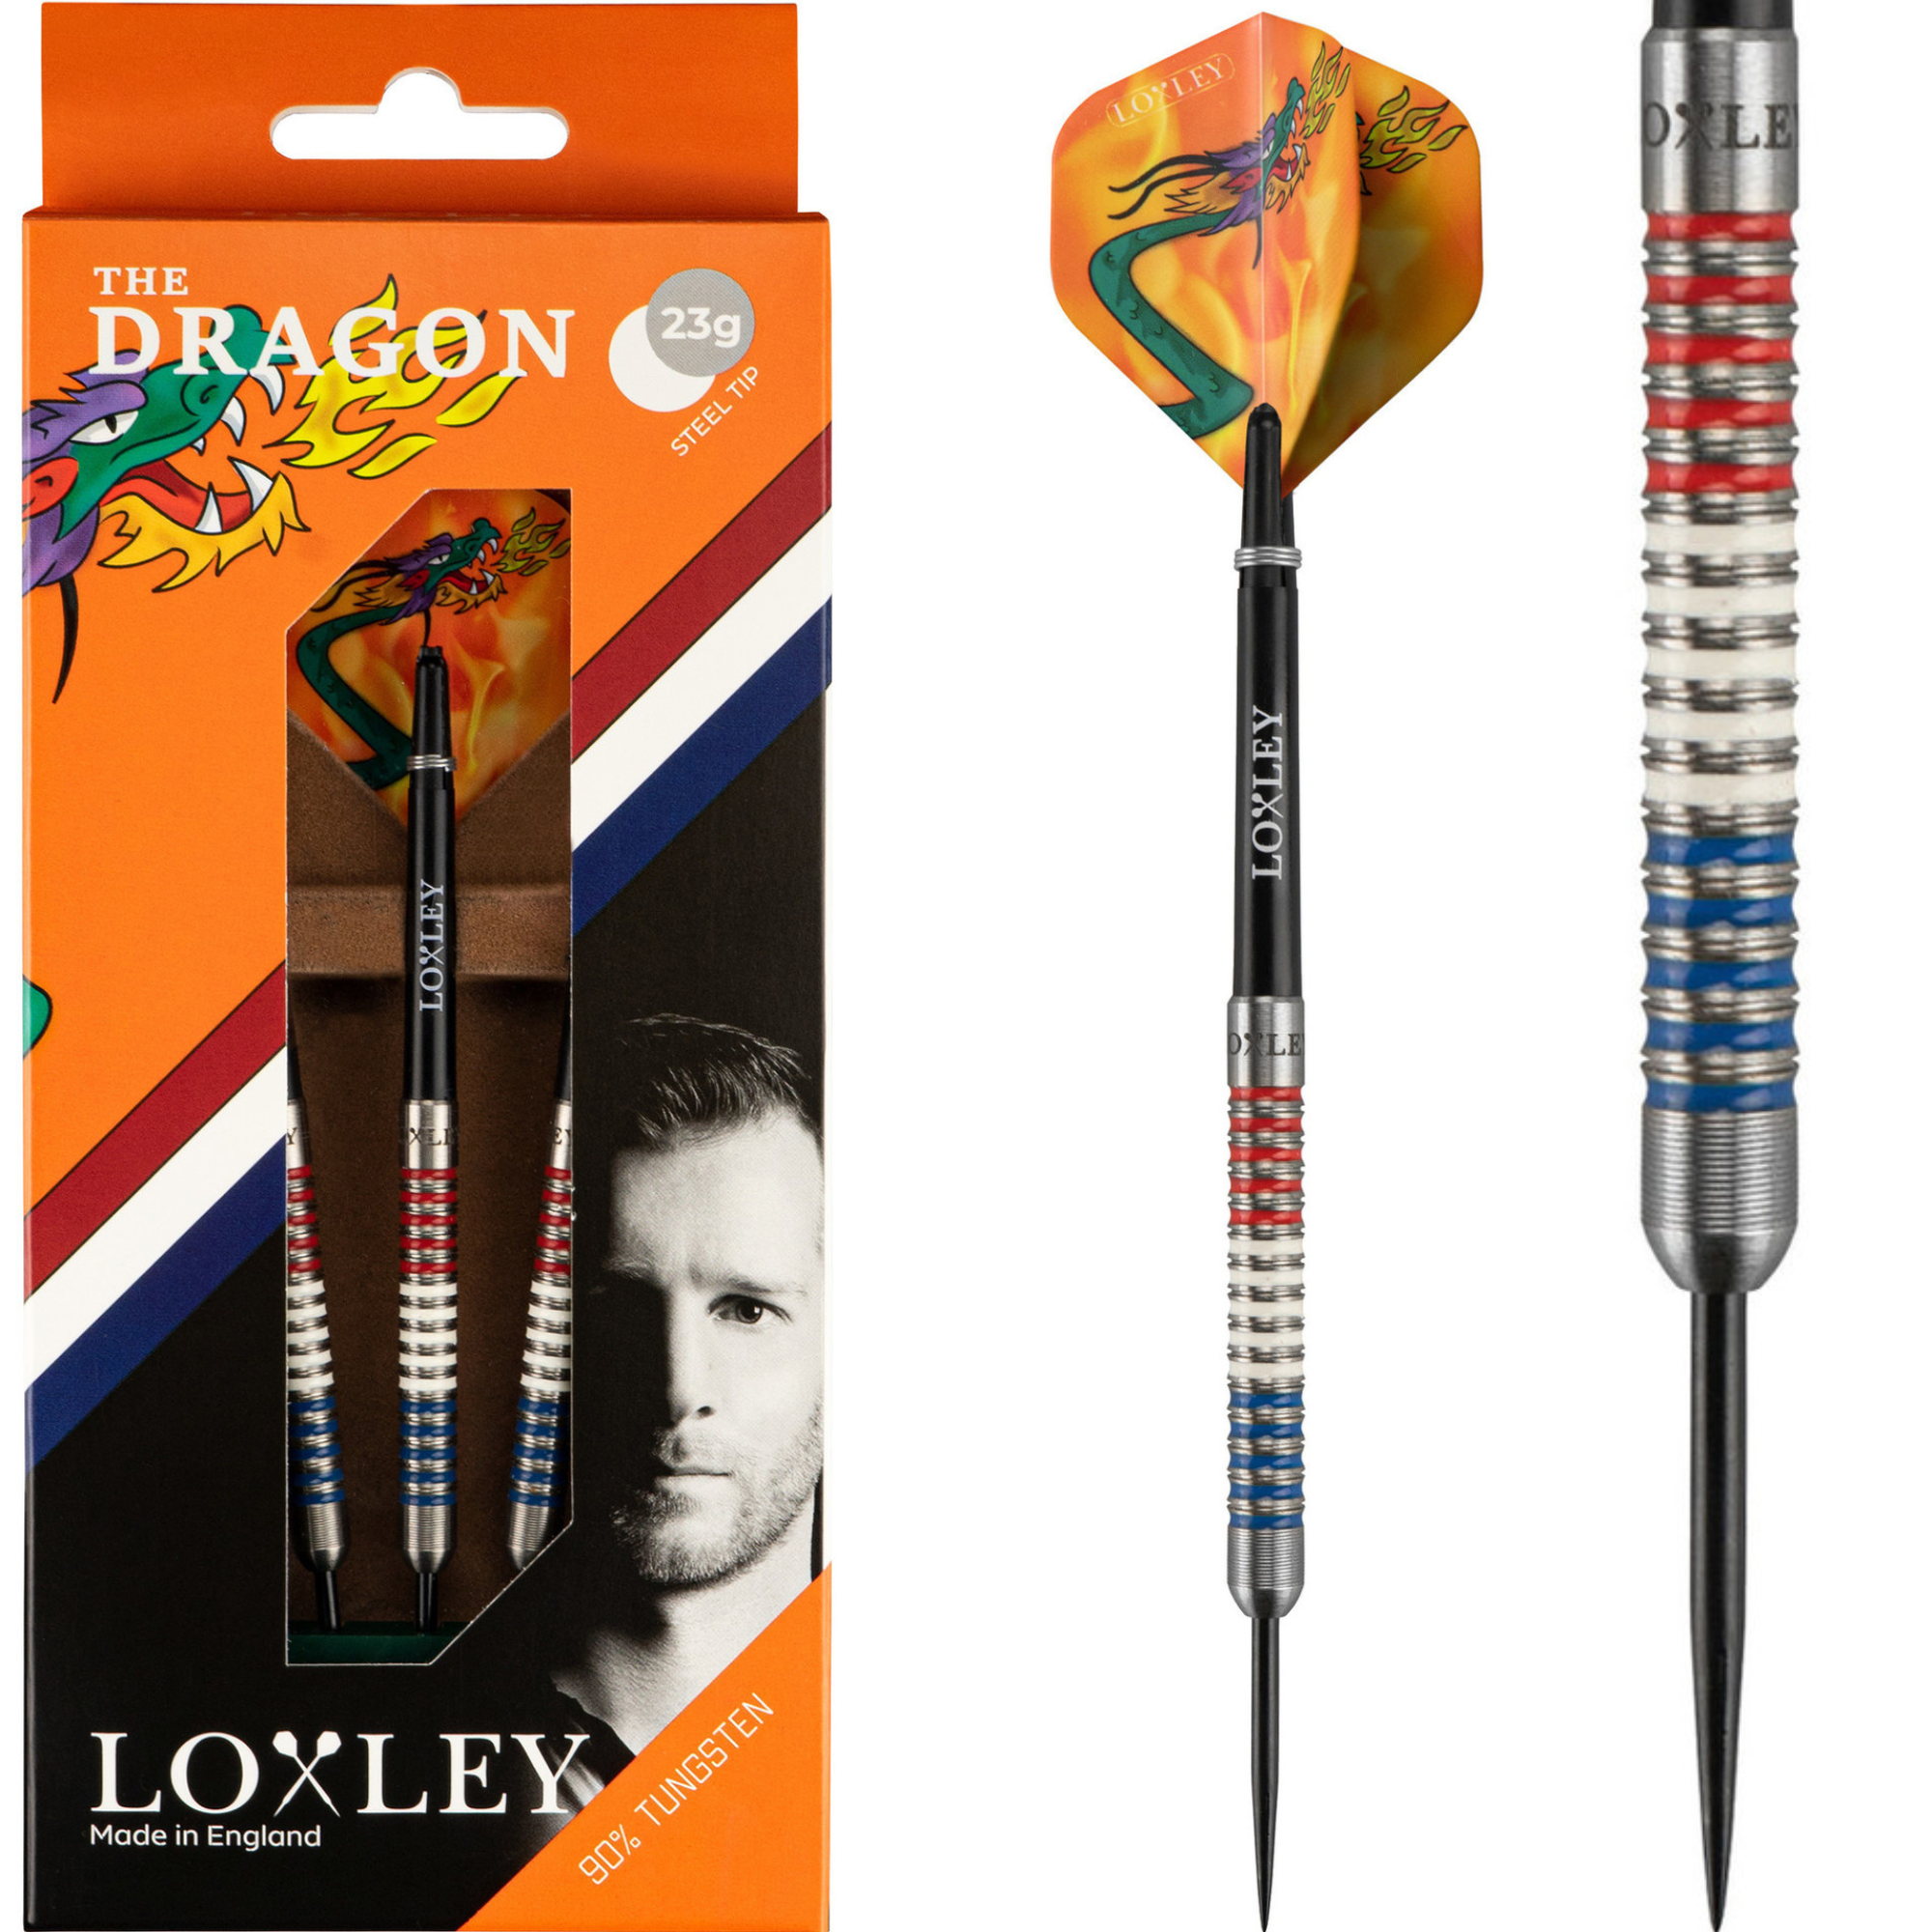 The Dragon darts 2000x2000